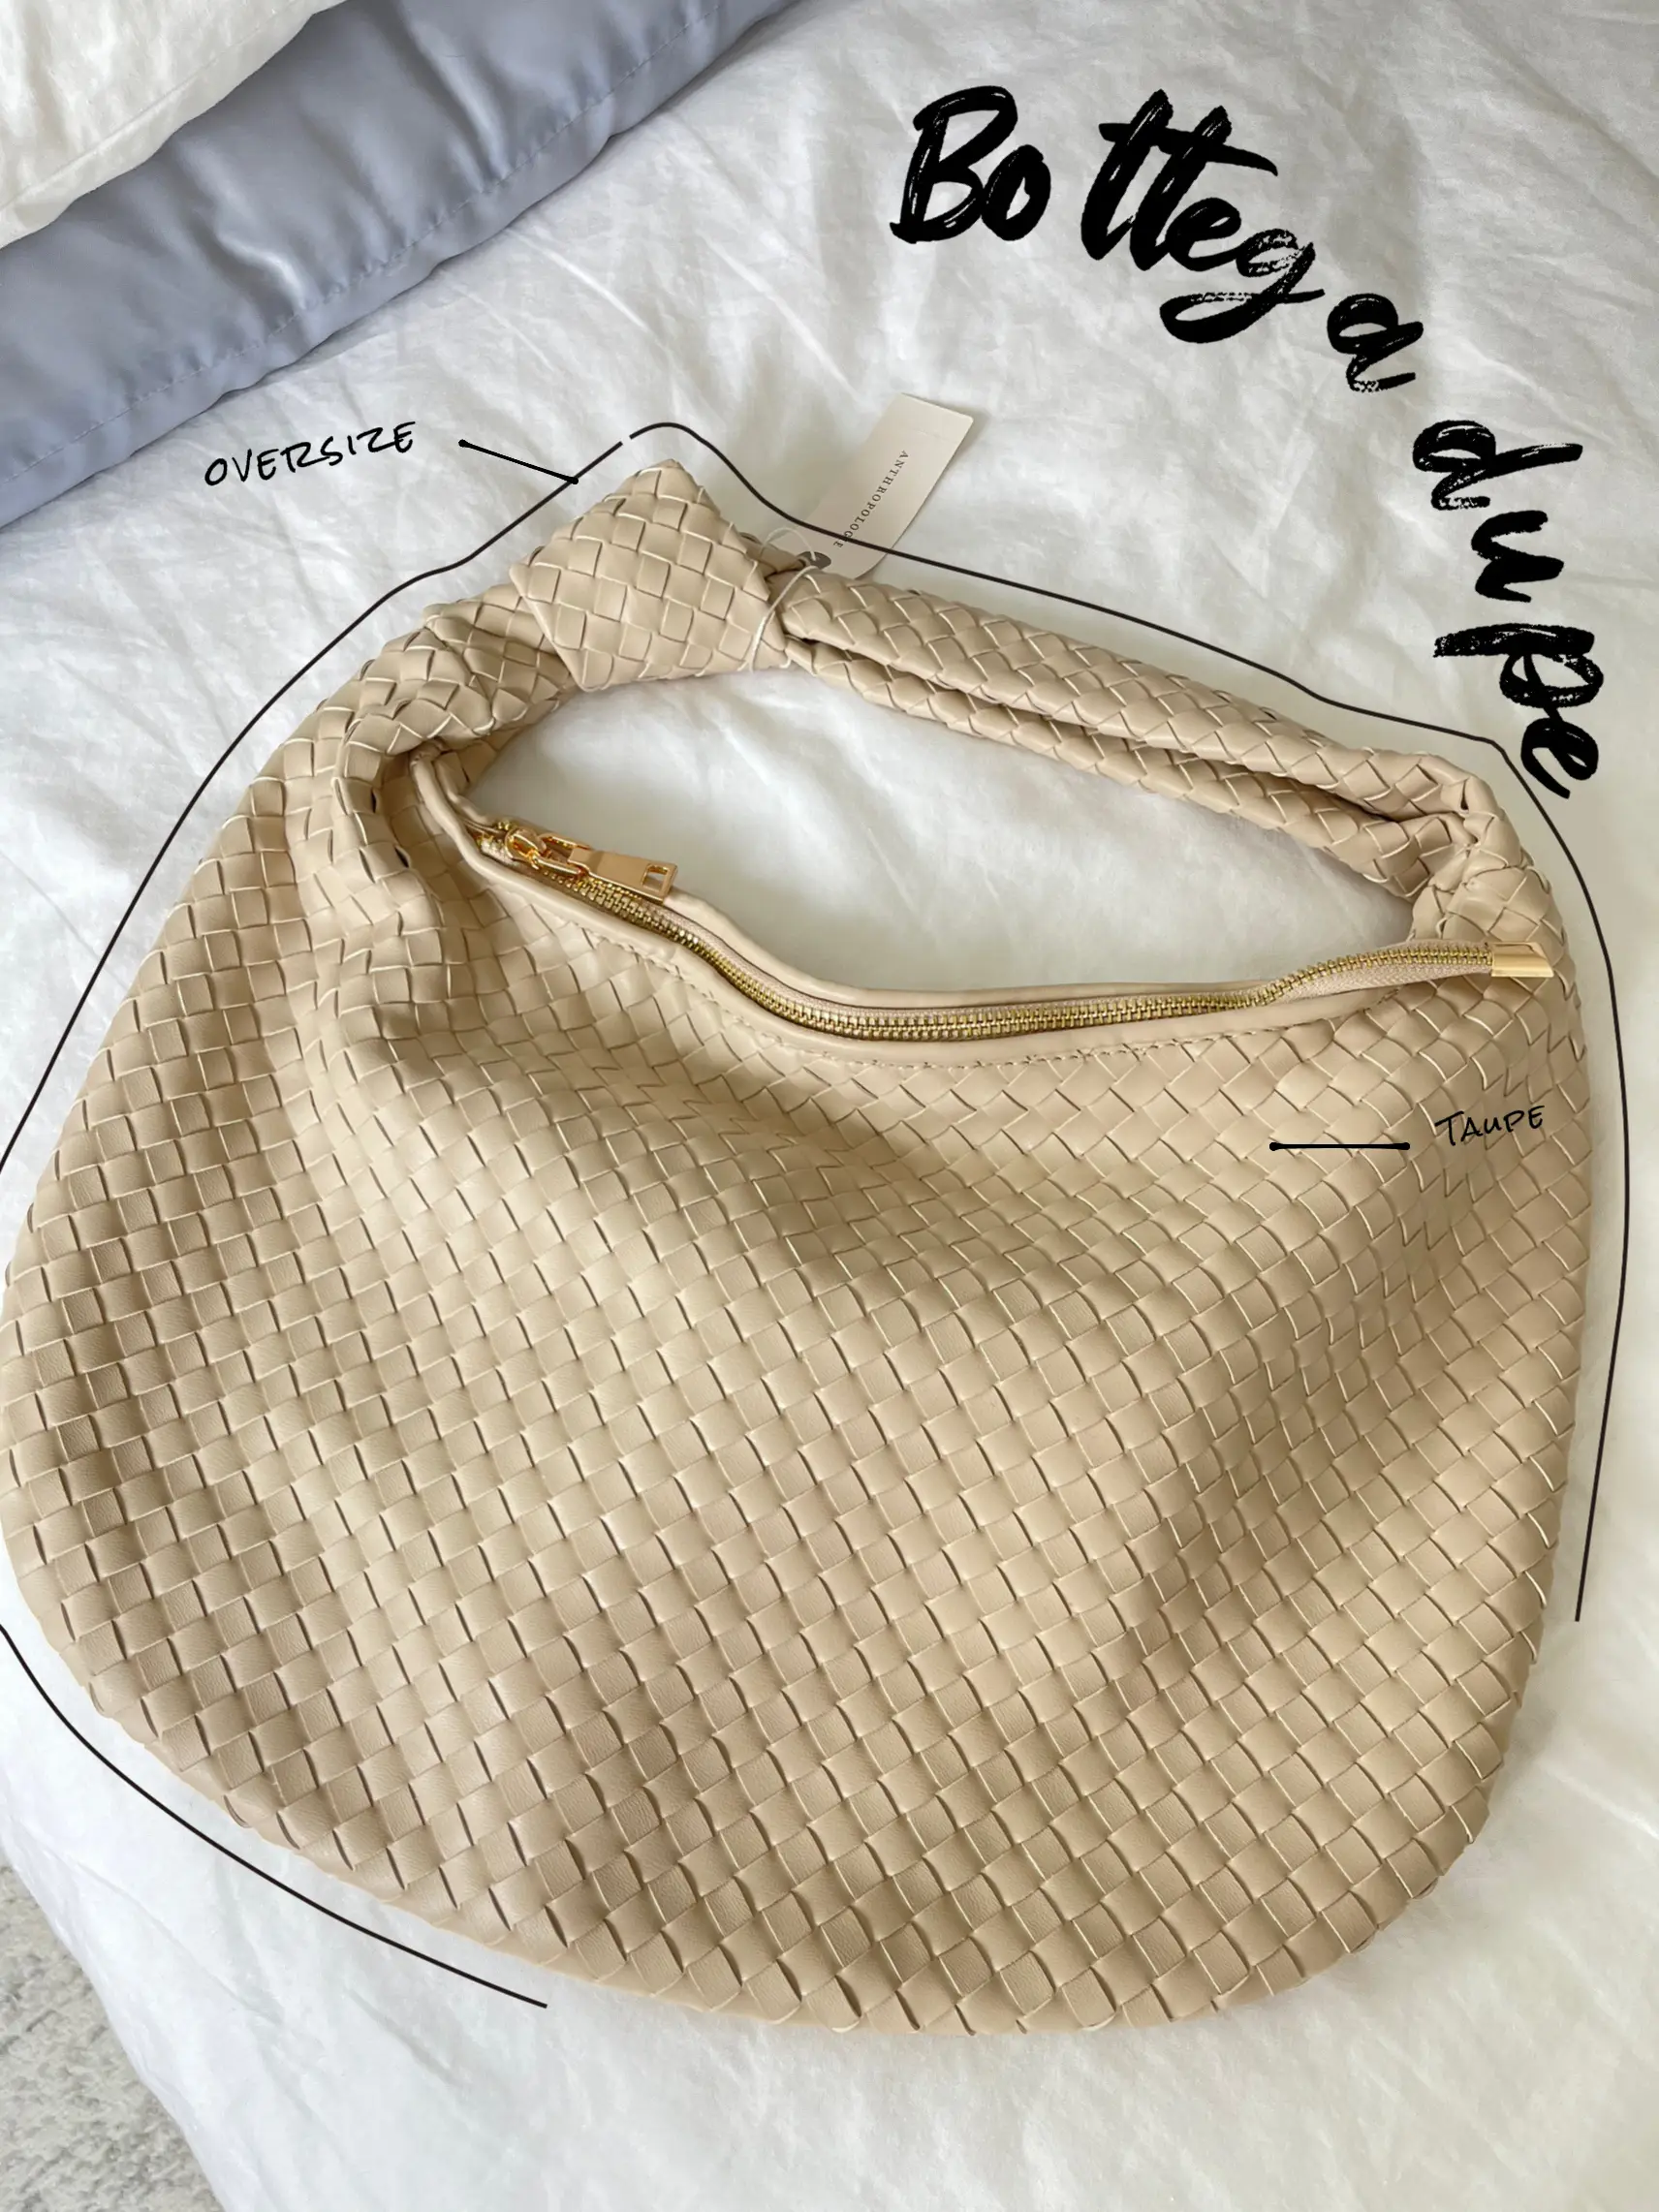 Bottega Veneta Mini Loop Bag 1 Year Review, Wear & Tear